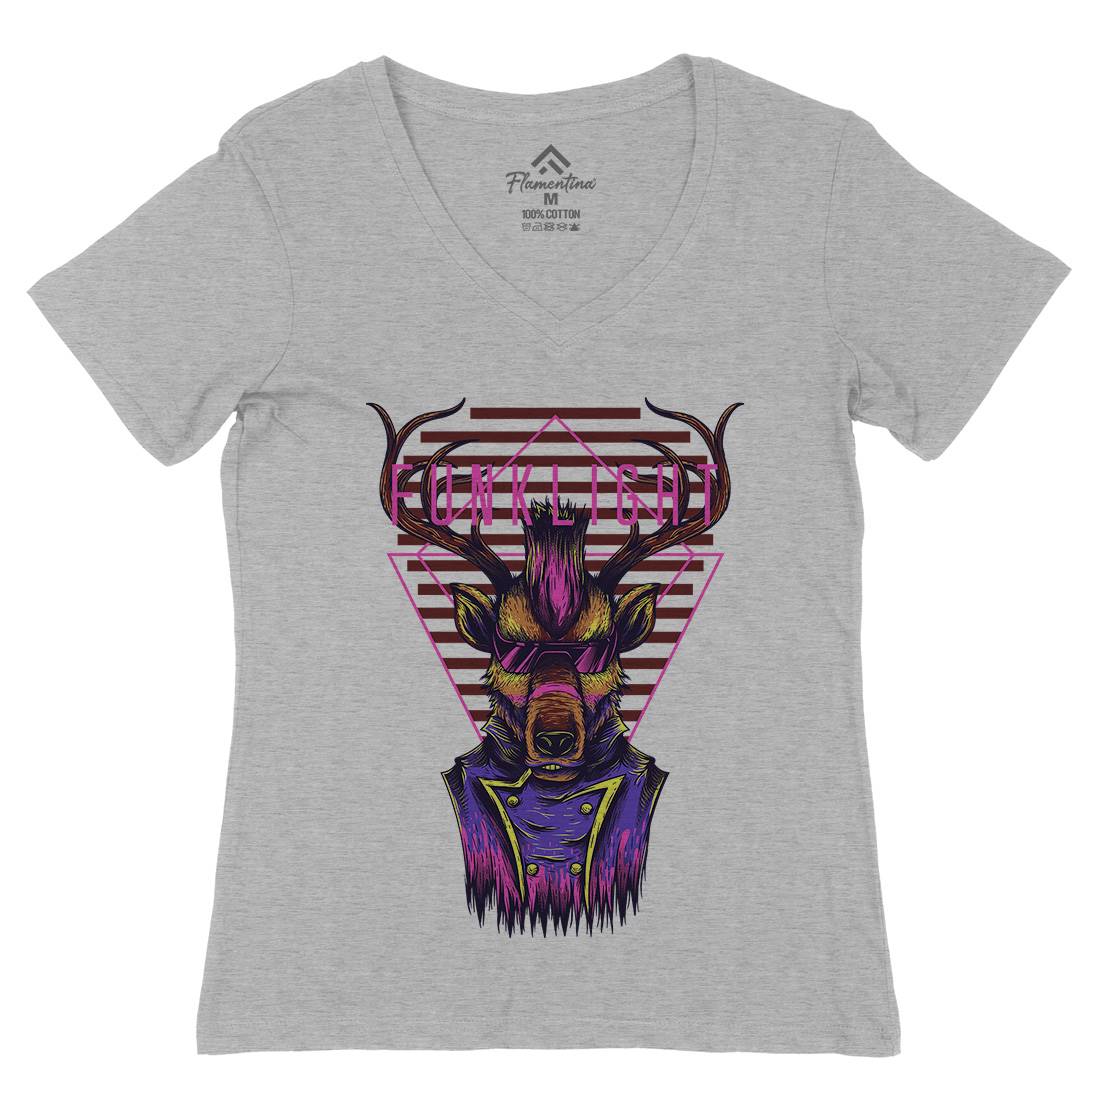 Funk Light Womens Organic V-Neck T-Shirt Animals D783